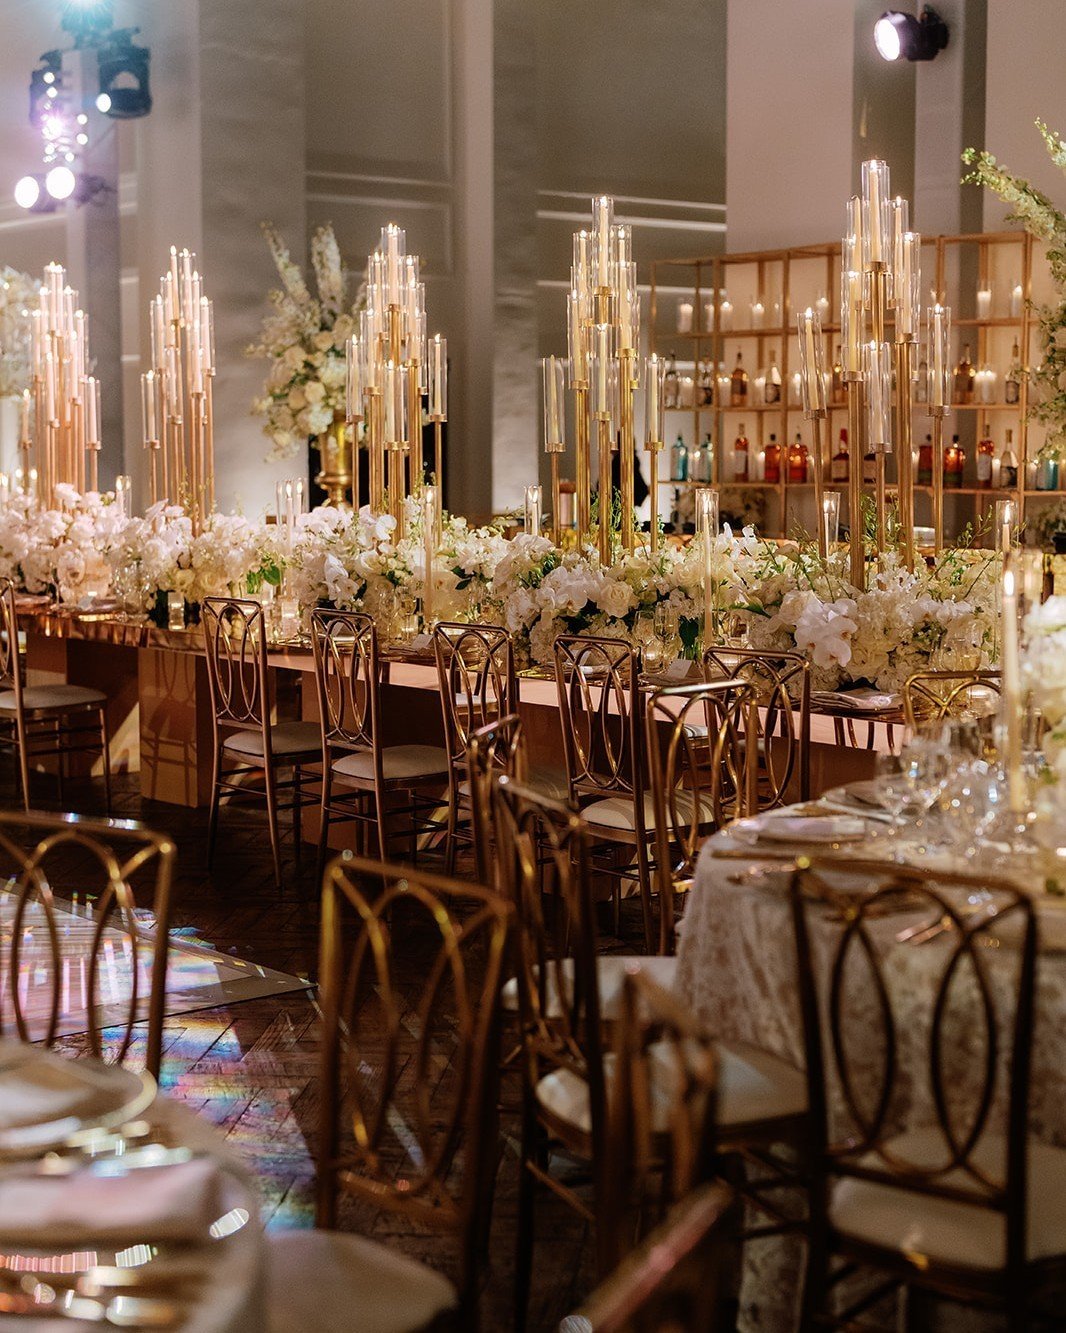 Splurge on the florals and rentals.⁠
⁠
That is all. Have a good #WeddingWednesday.⁠
⁠
Planner | @aniwolff_⁠
Venue | @arlohotels⁠
Photographer | @patfureyphoto⁠
Videographer | @the.totos⁠
Florist | @theavenuejflorist⁠
Entertainment | @hanklanemusic⁠
E